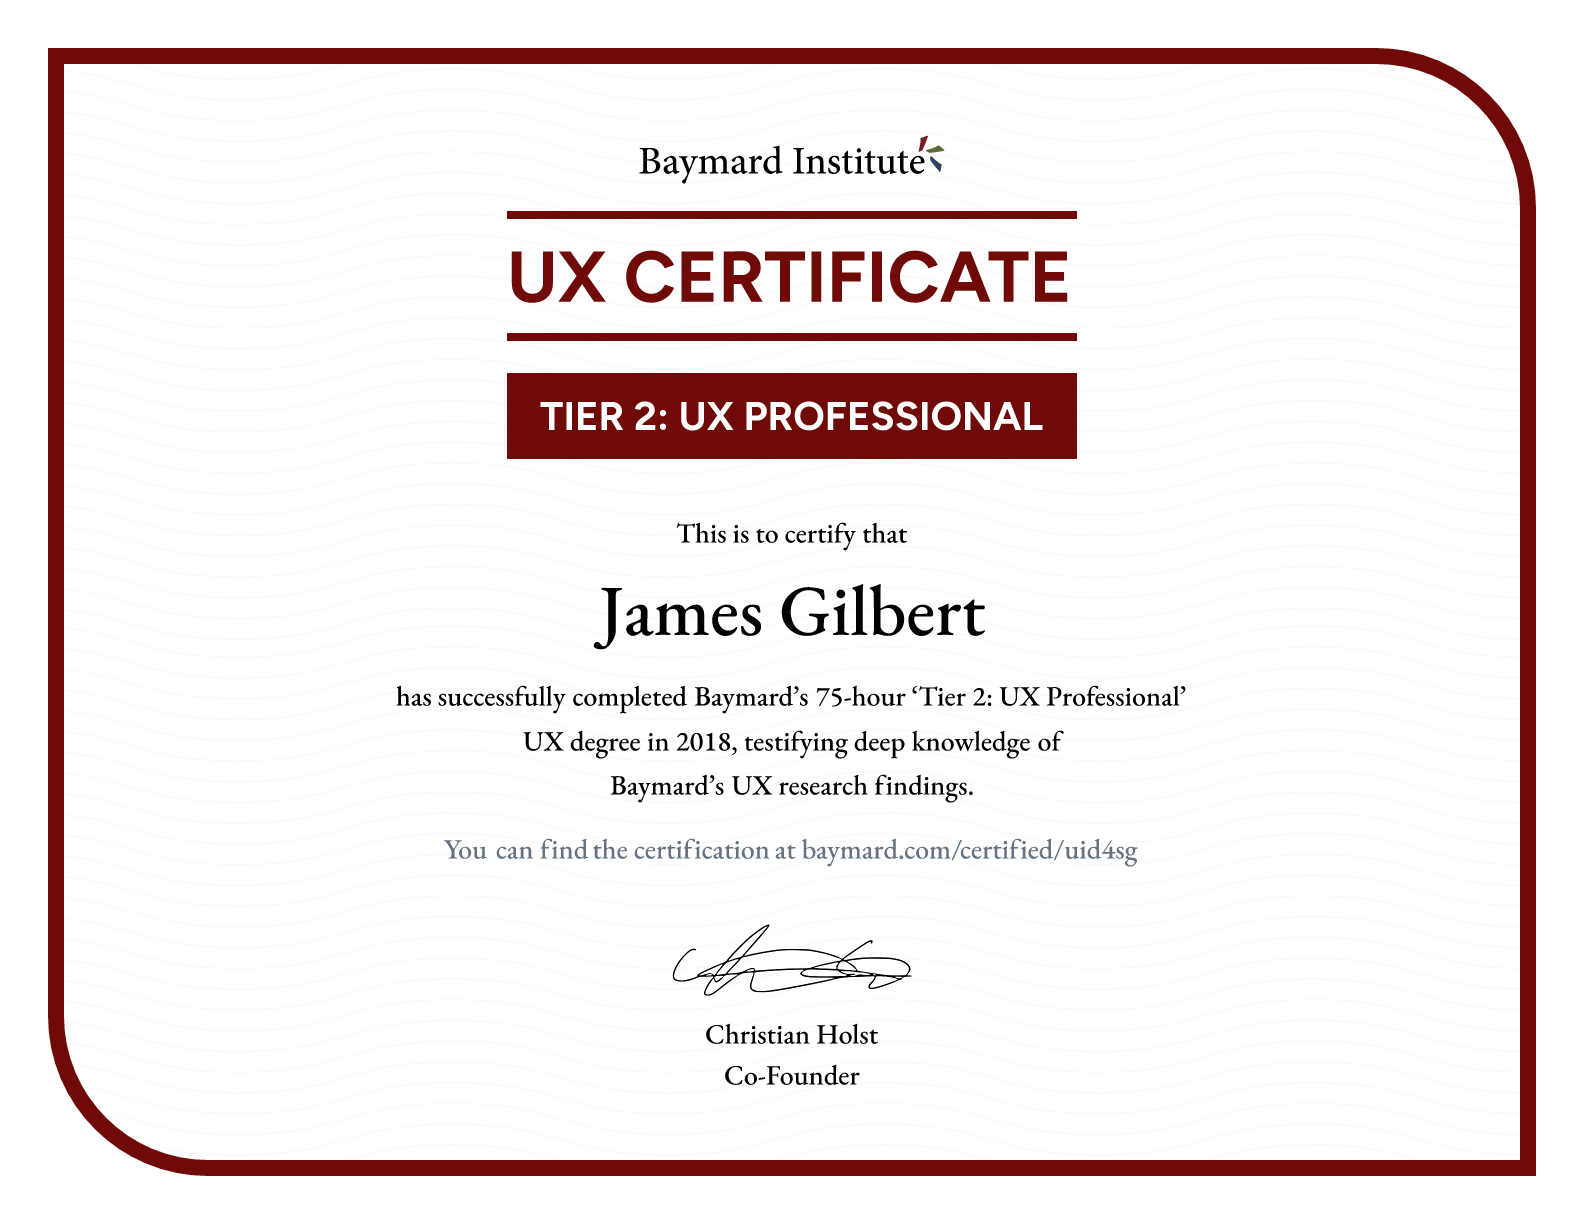 James Gilbert’s certificate